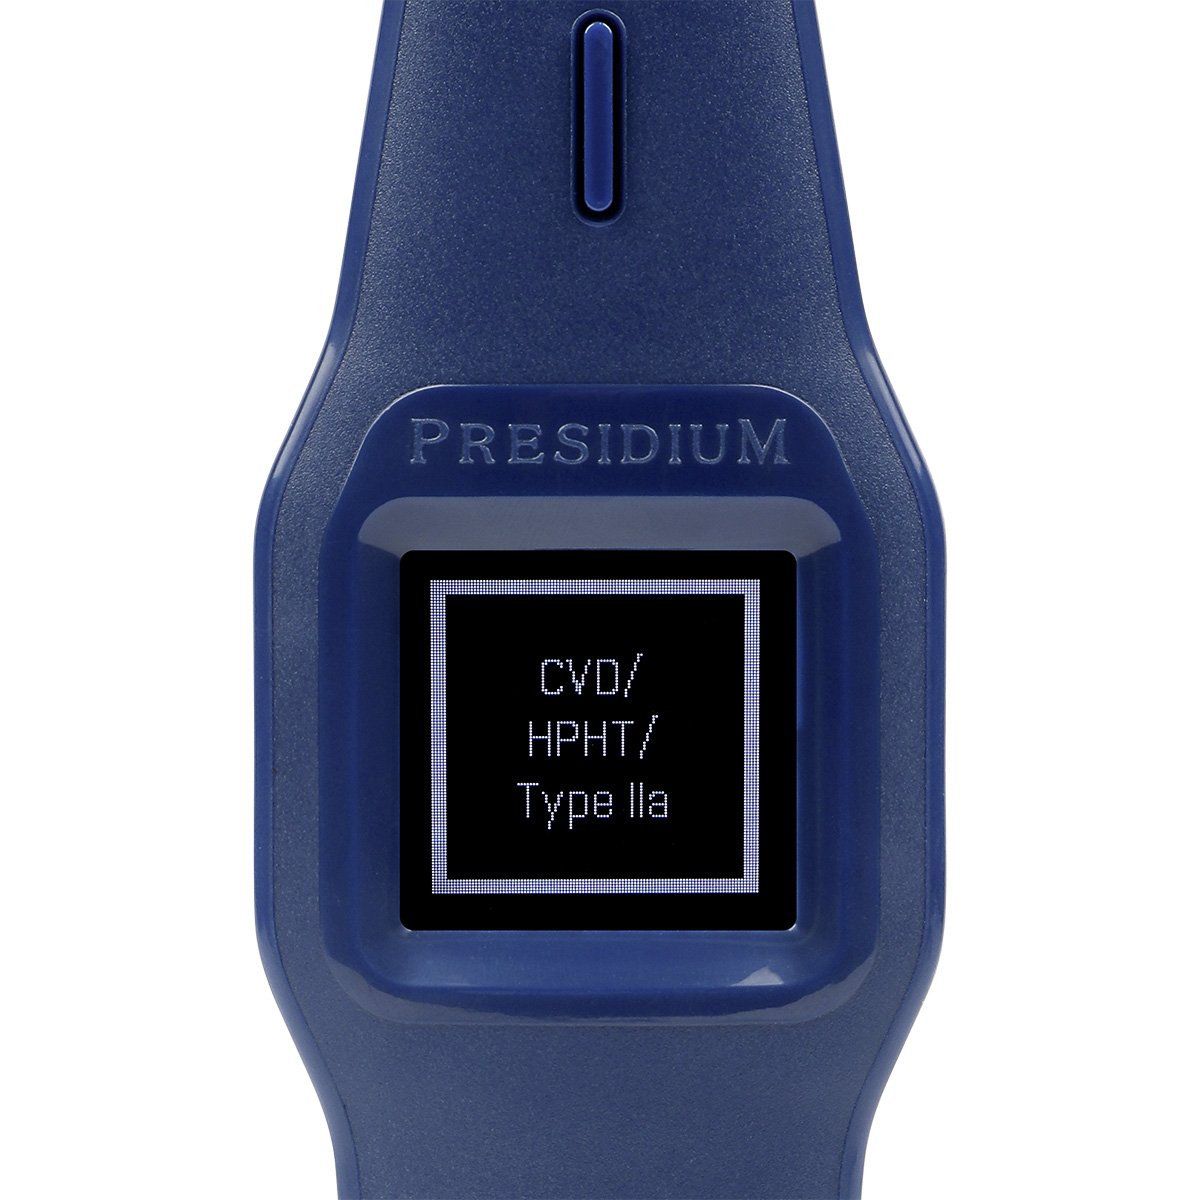 Presidium ARI handheld testing device for colorless diamonds